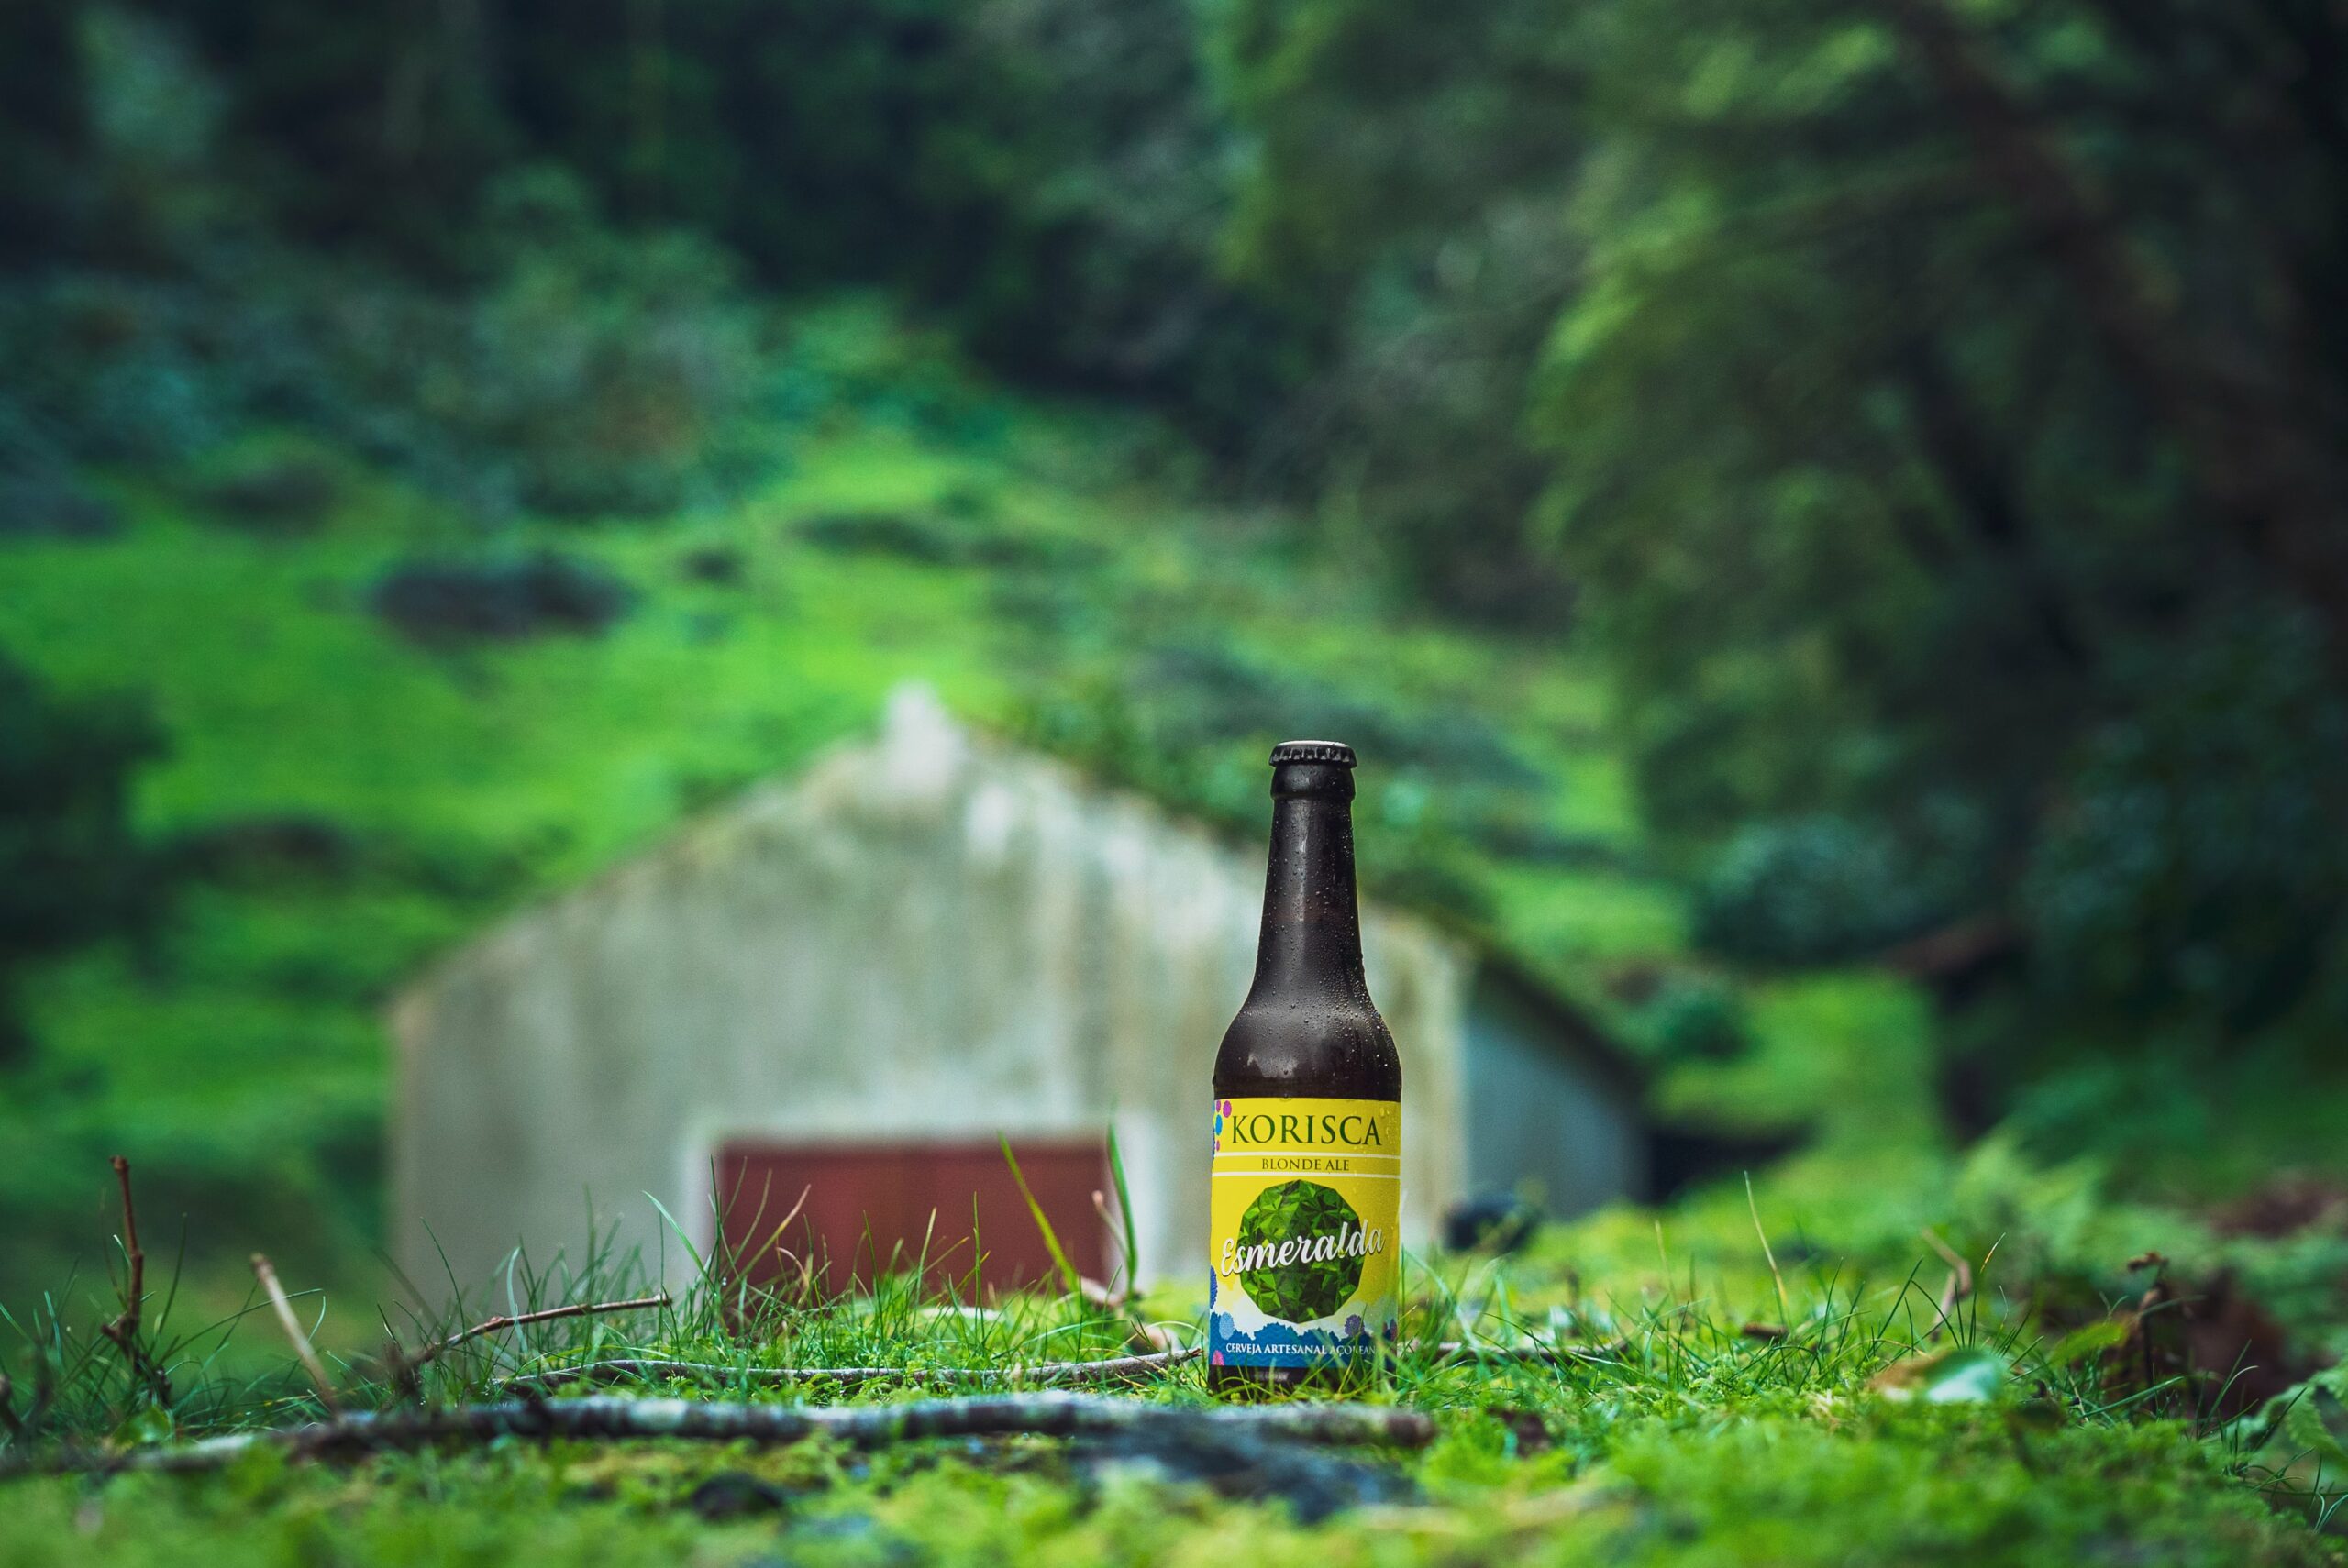 Azorean craft beer Korisca Esmeralda (Blonde Ale), on green soil, with a house, trees and green vegetation, in Sete Cidades, São Miguel, Ponta Delgada, Azores.